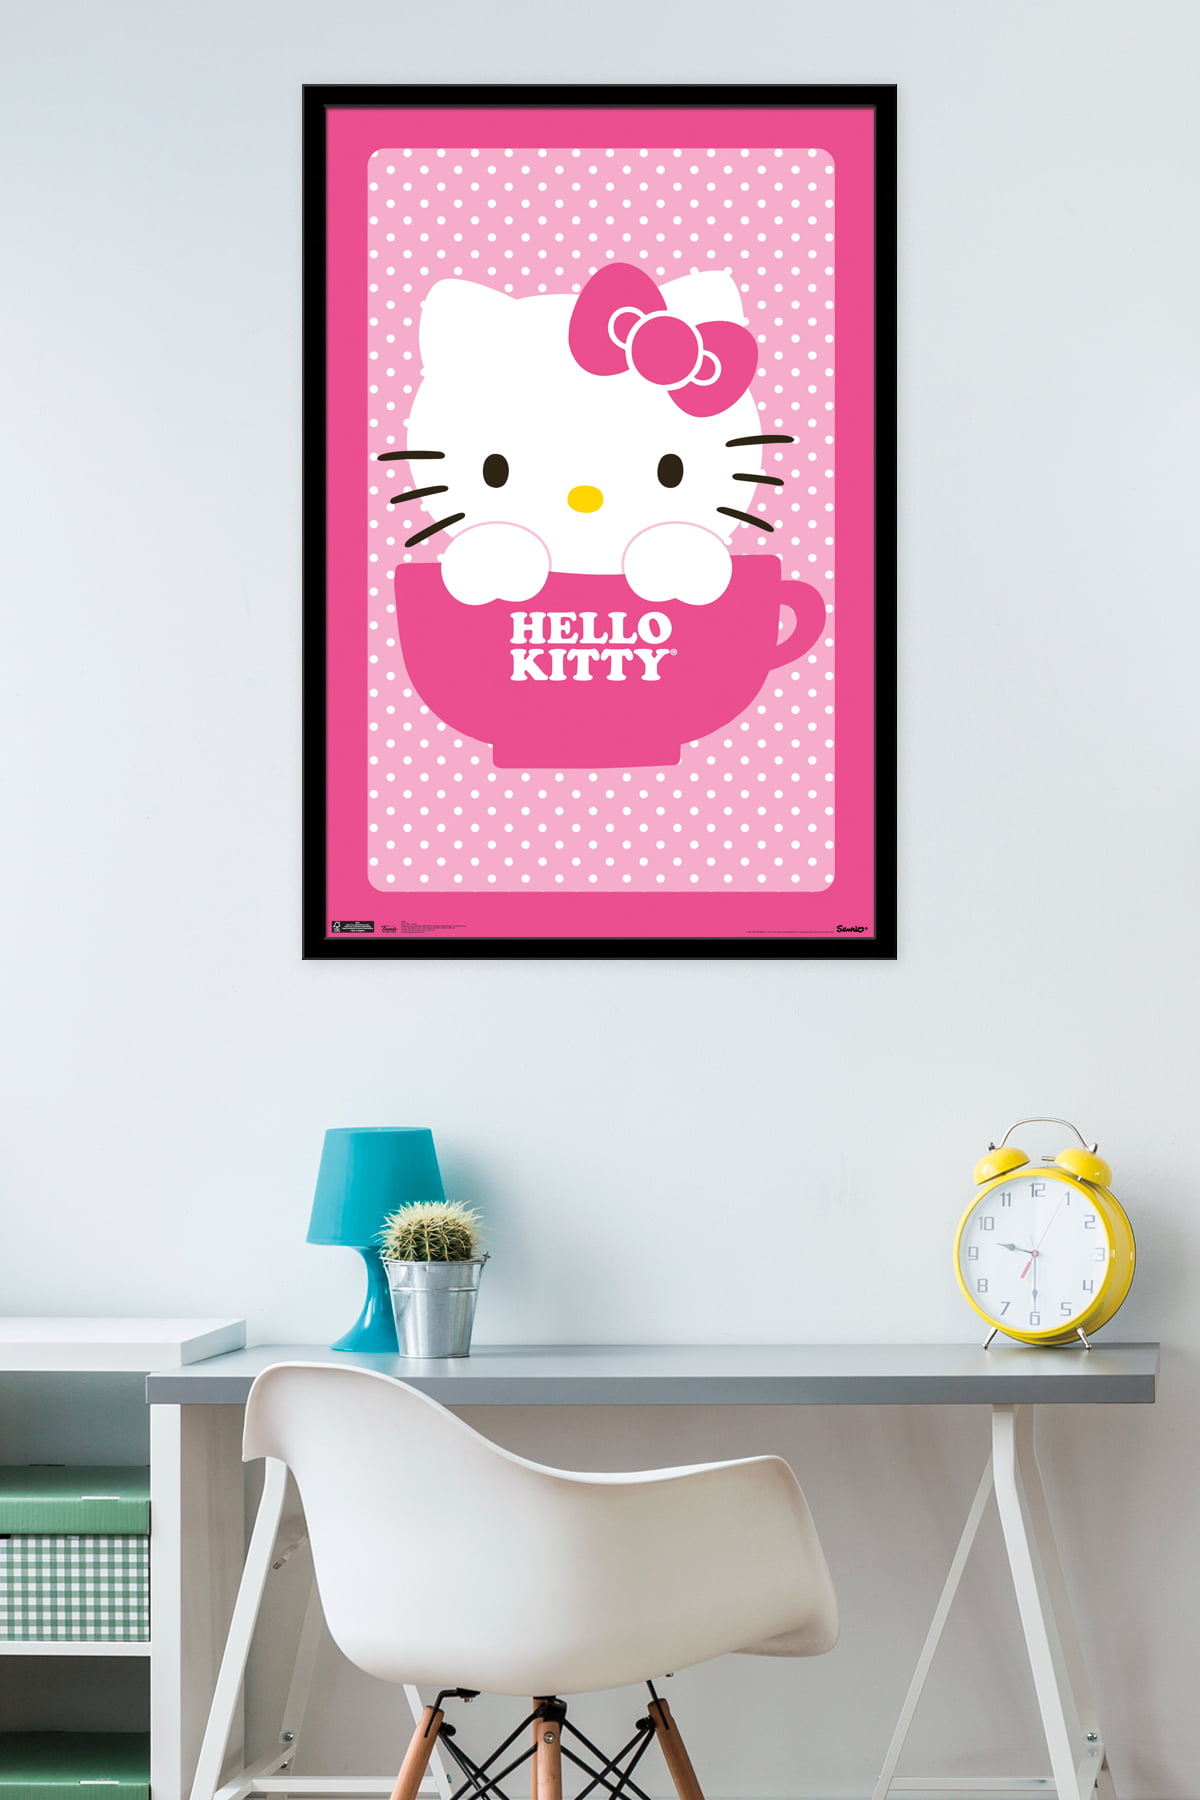 Hello Kitty – Teacup Poster 22x34 RP5462 UPC017681054628 – Mason